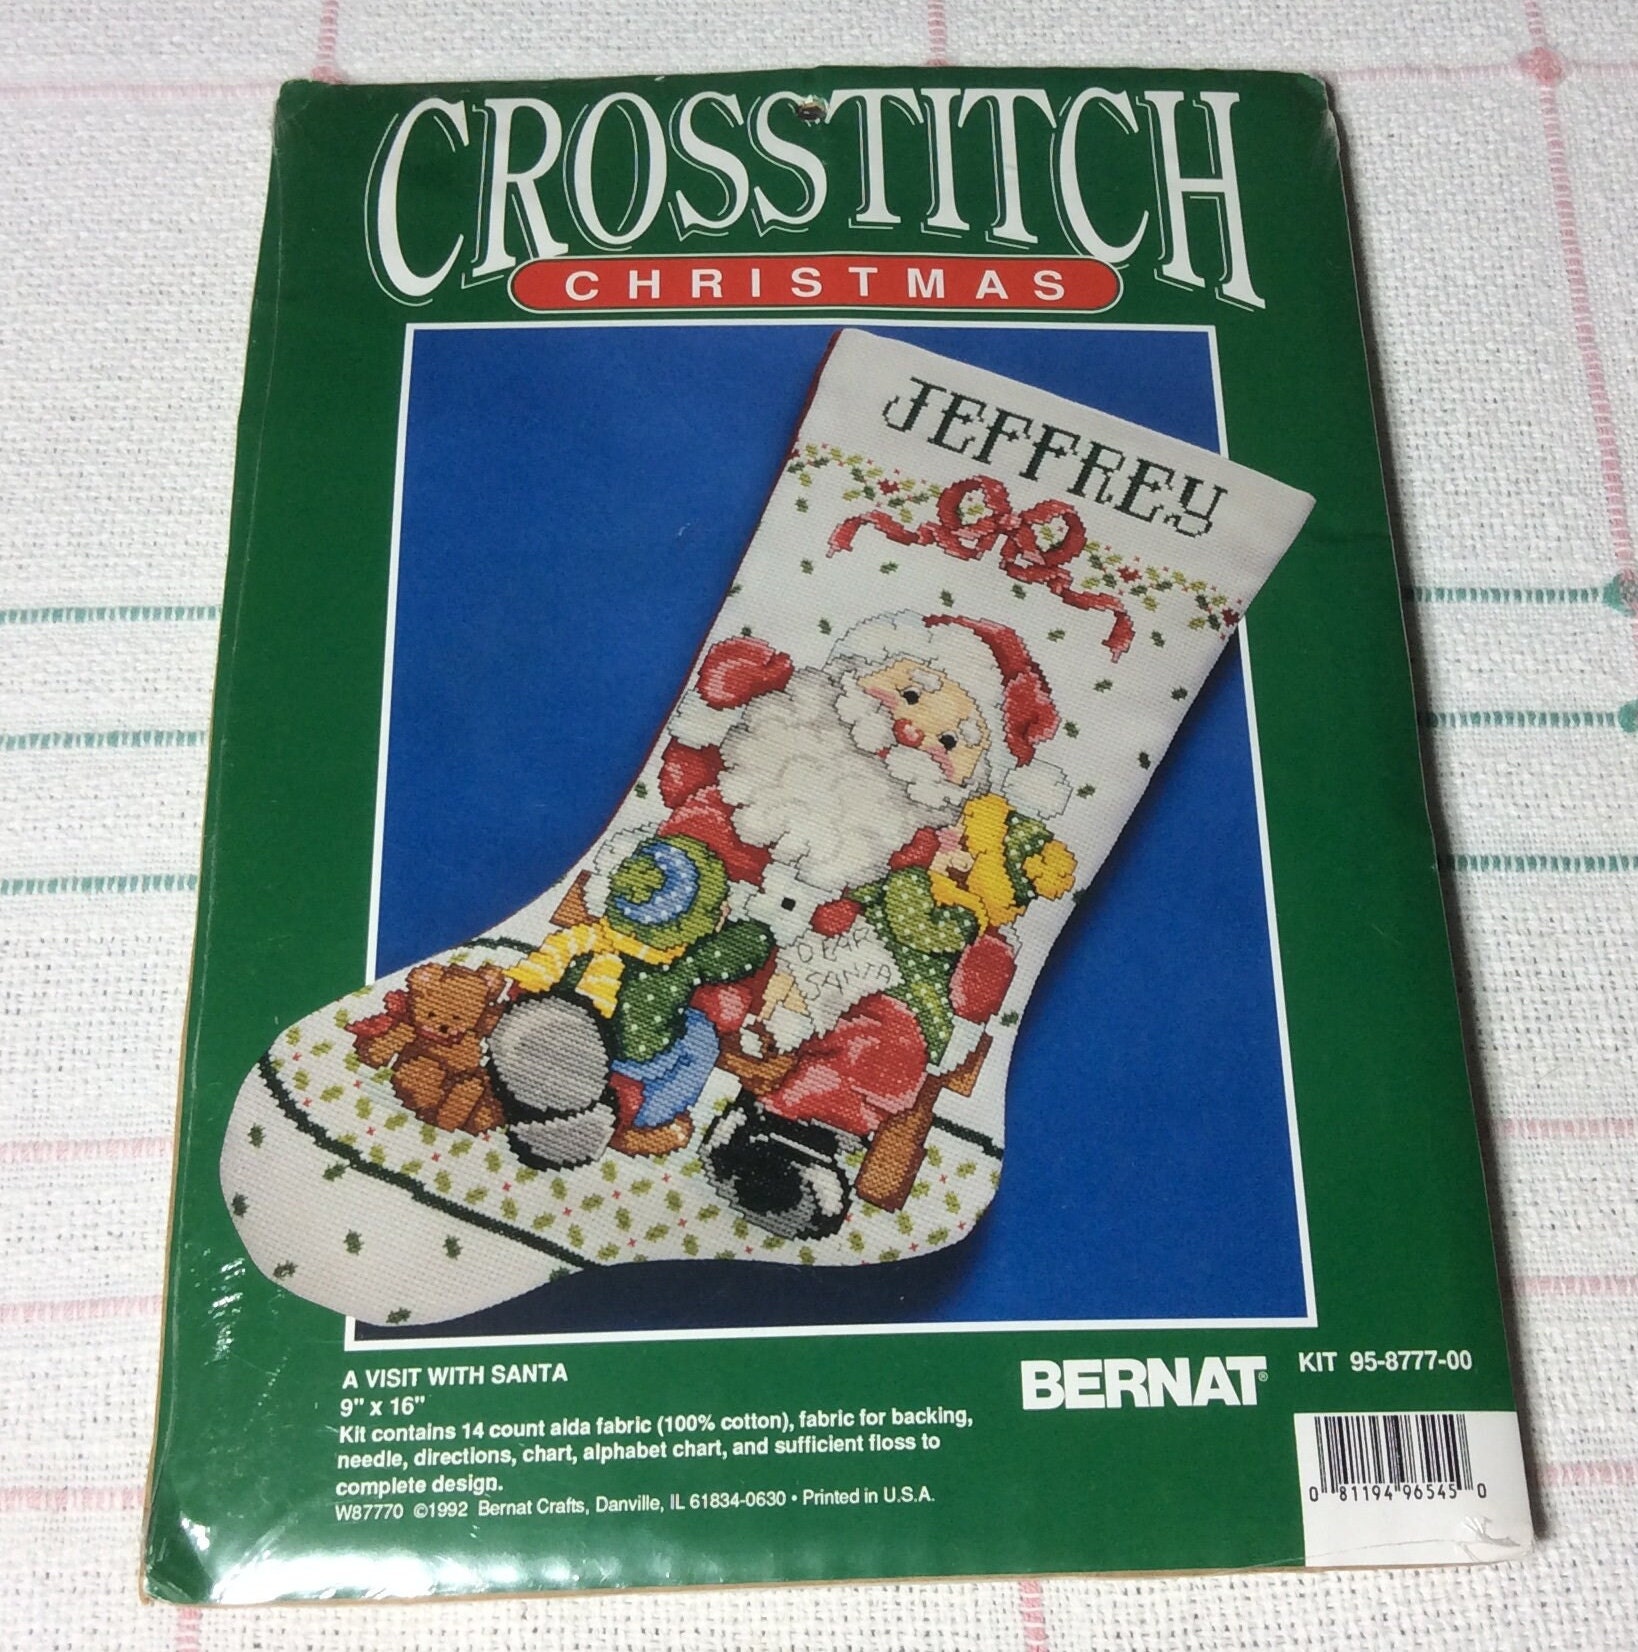 Bernat Crosstitch Christmas A Visit With Santa Stocking Kit No. 95-8777-0  Dated 1992 